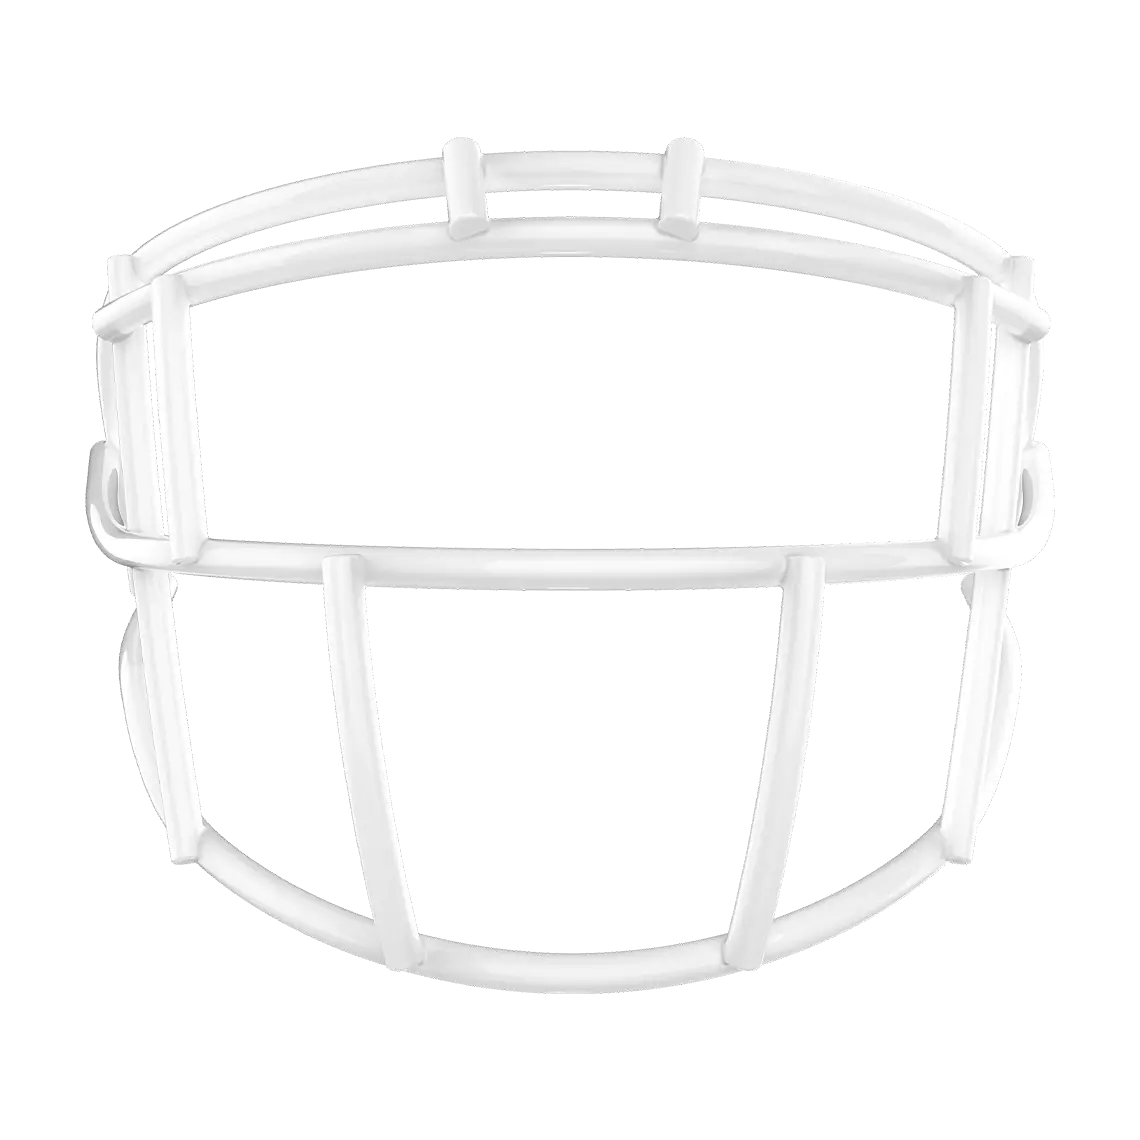 Navy XRS-21SX face mask for football helmet.